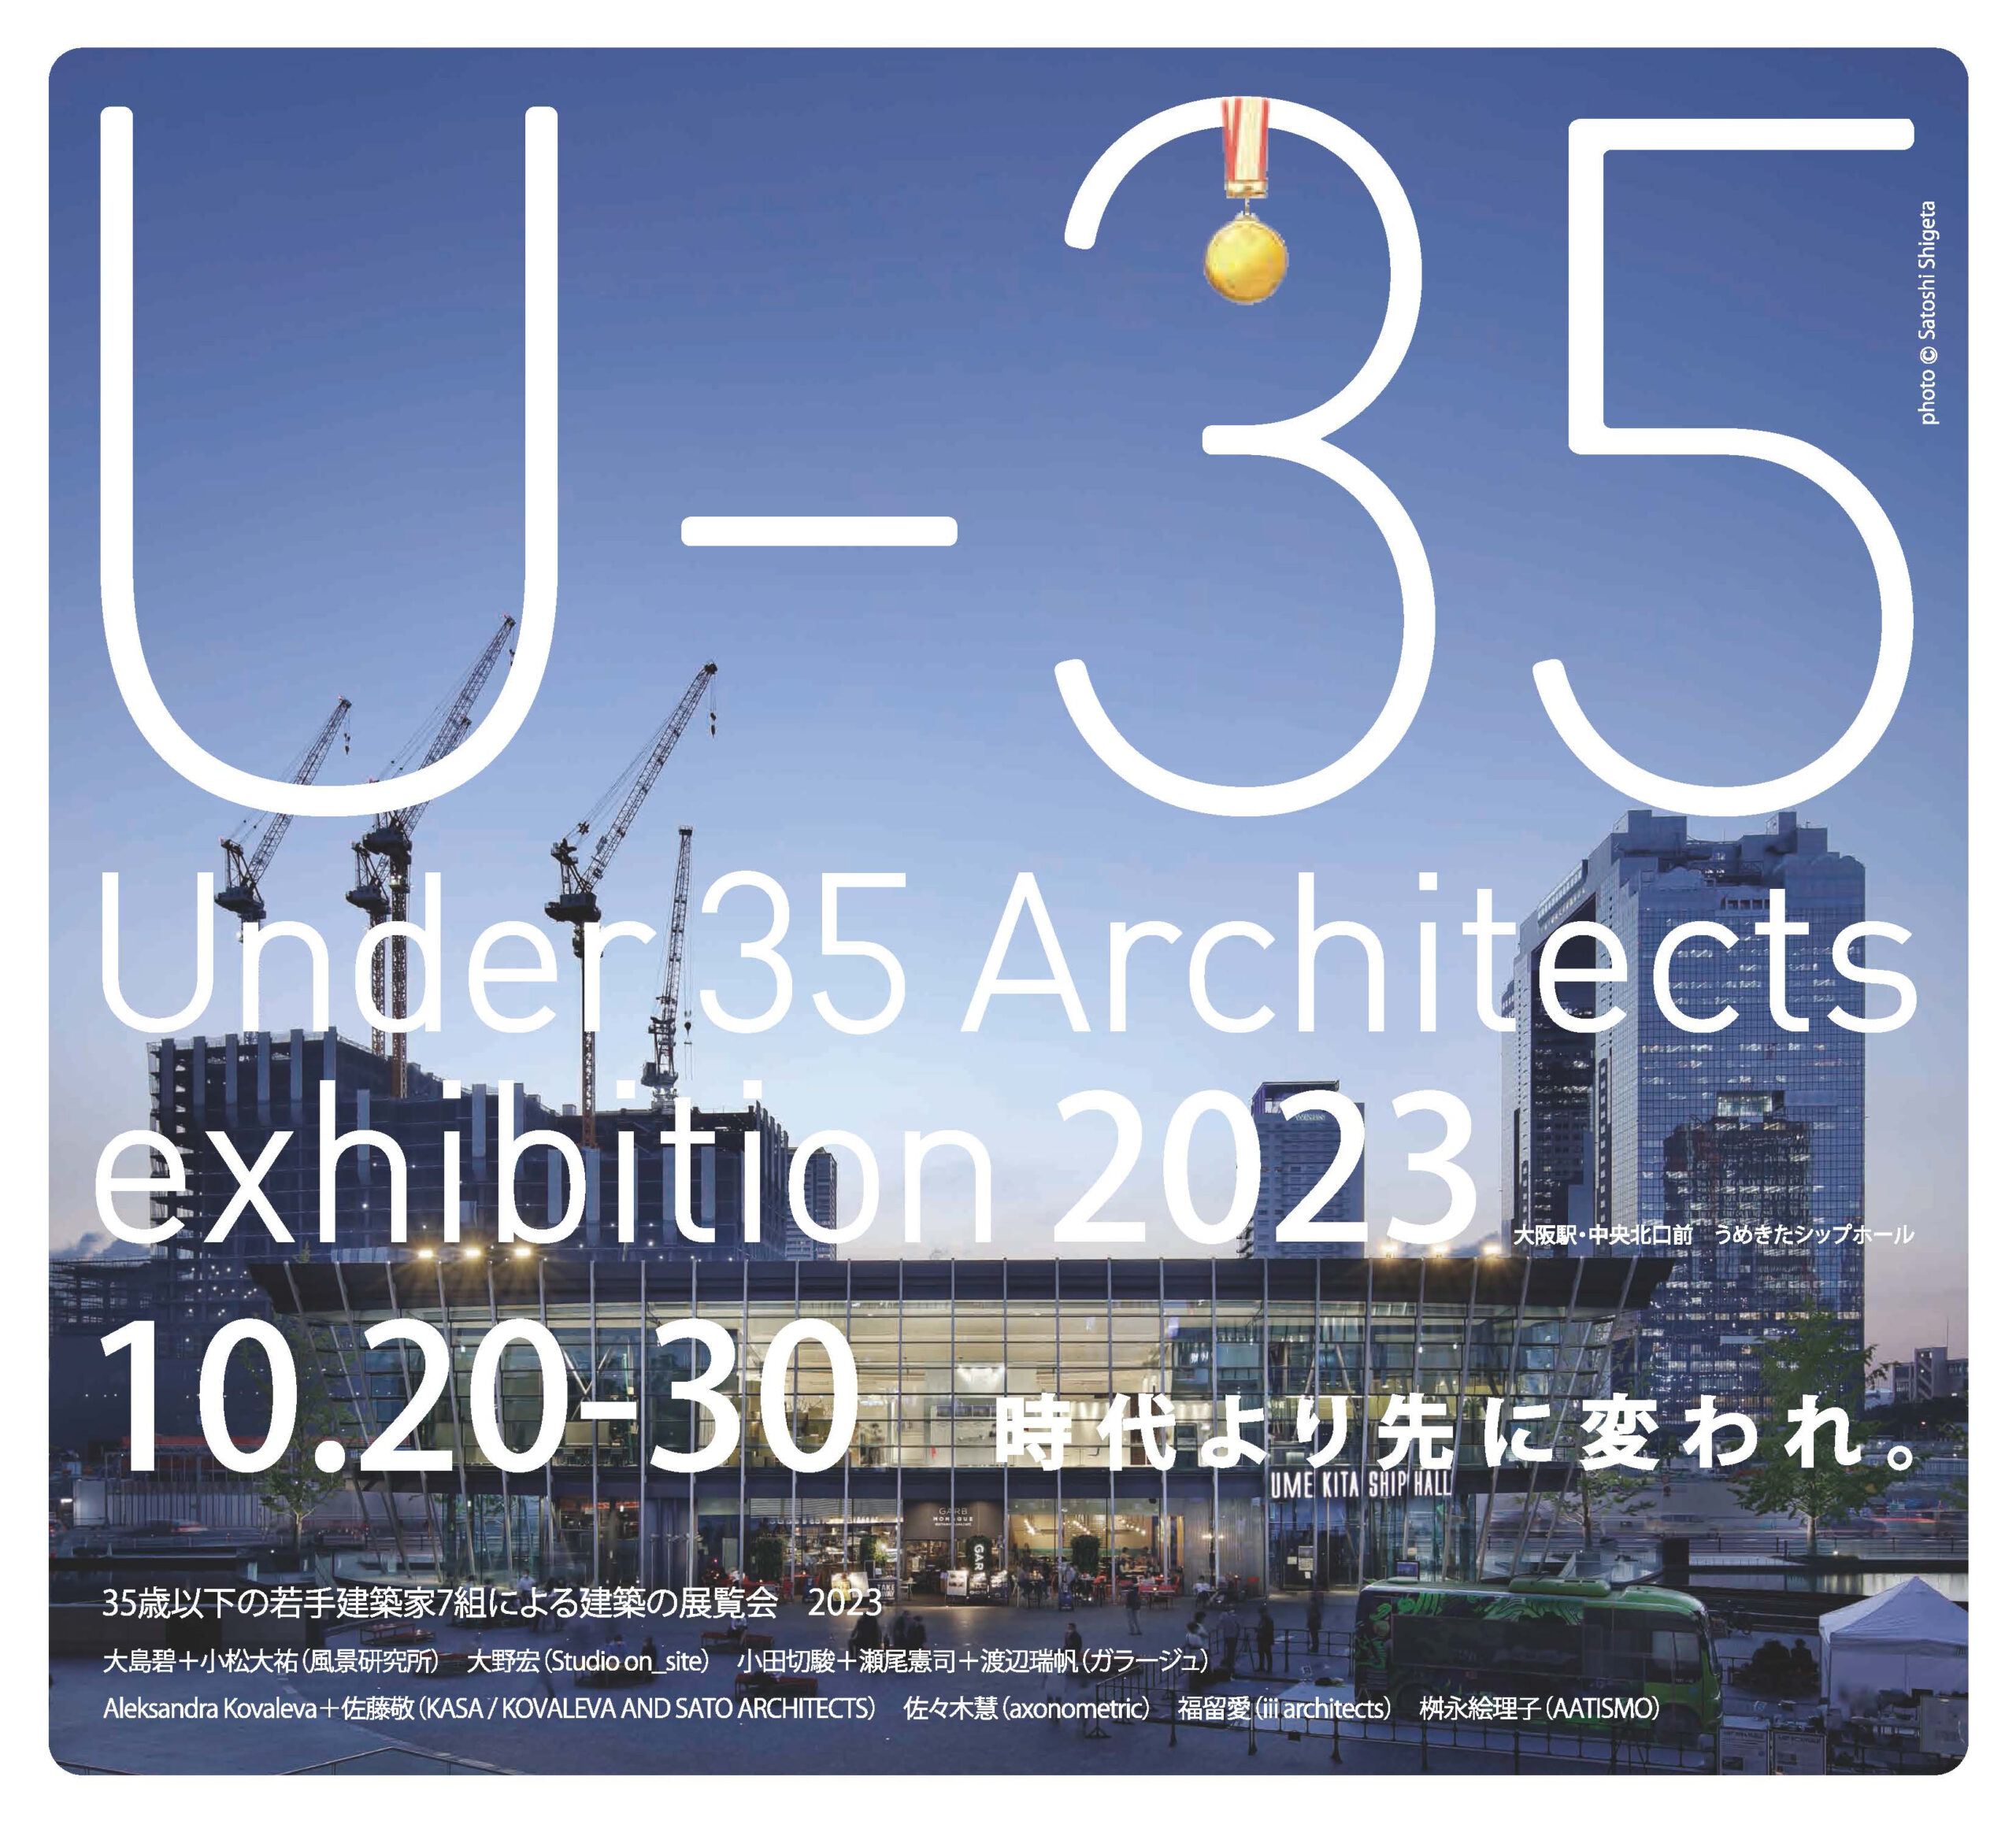 Under 35 Architects exhibition 2023 出展決定